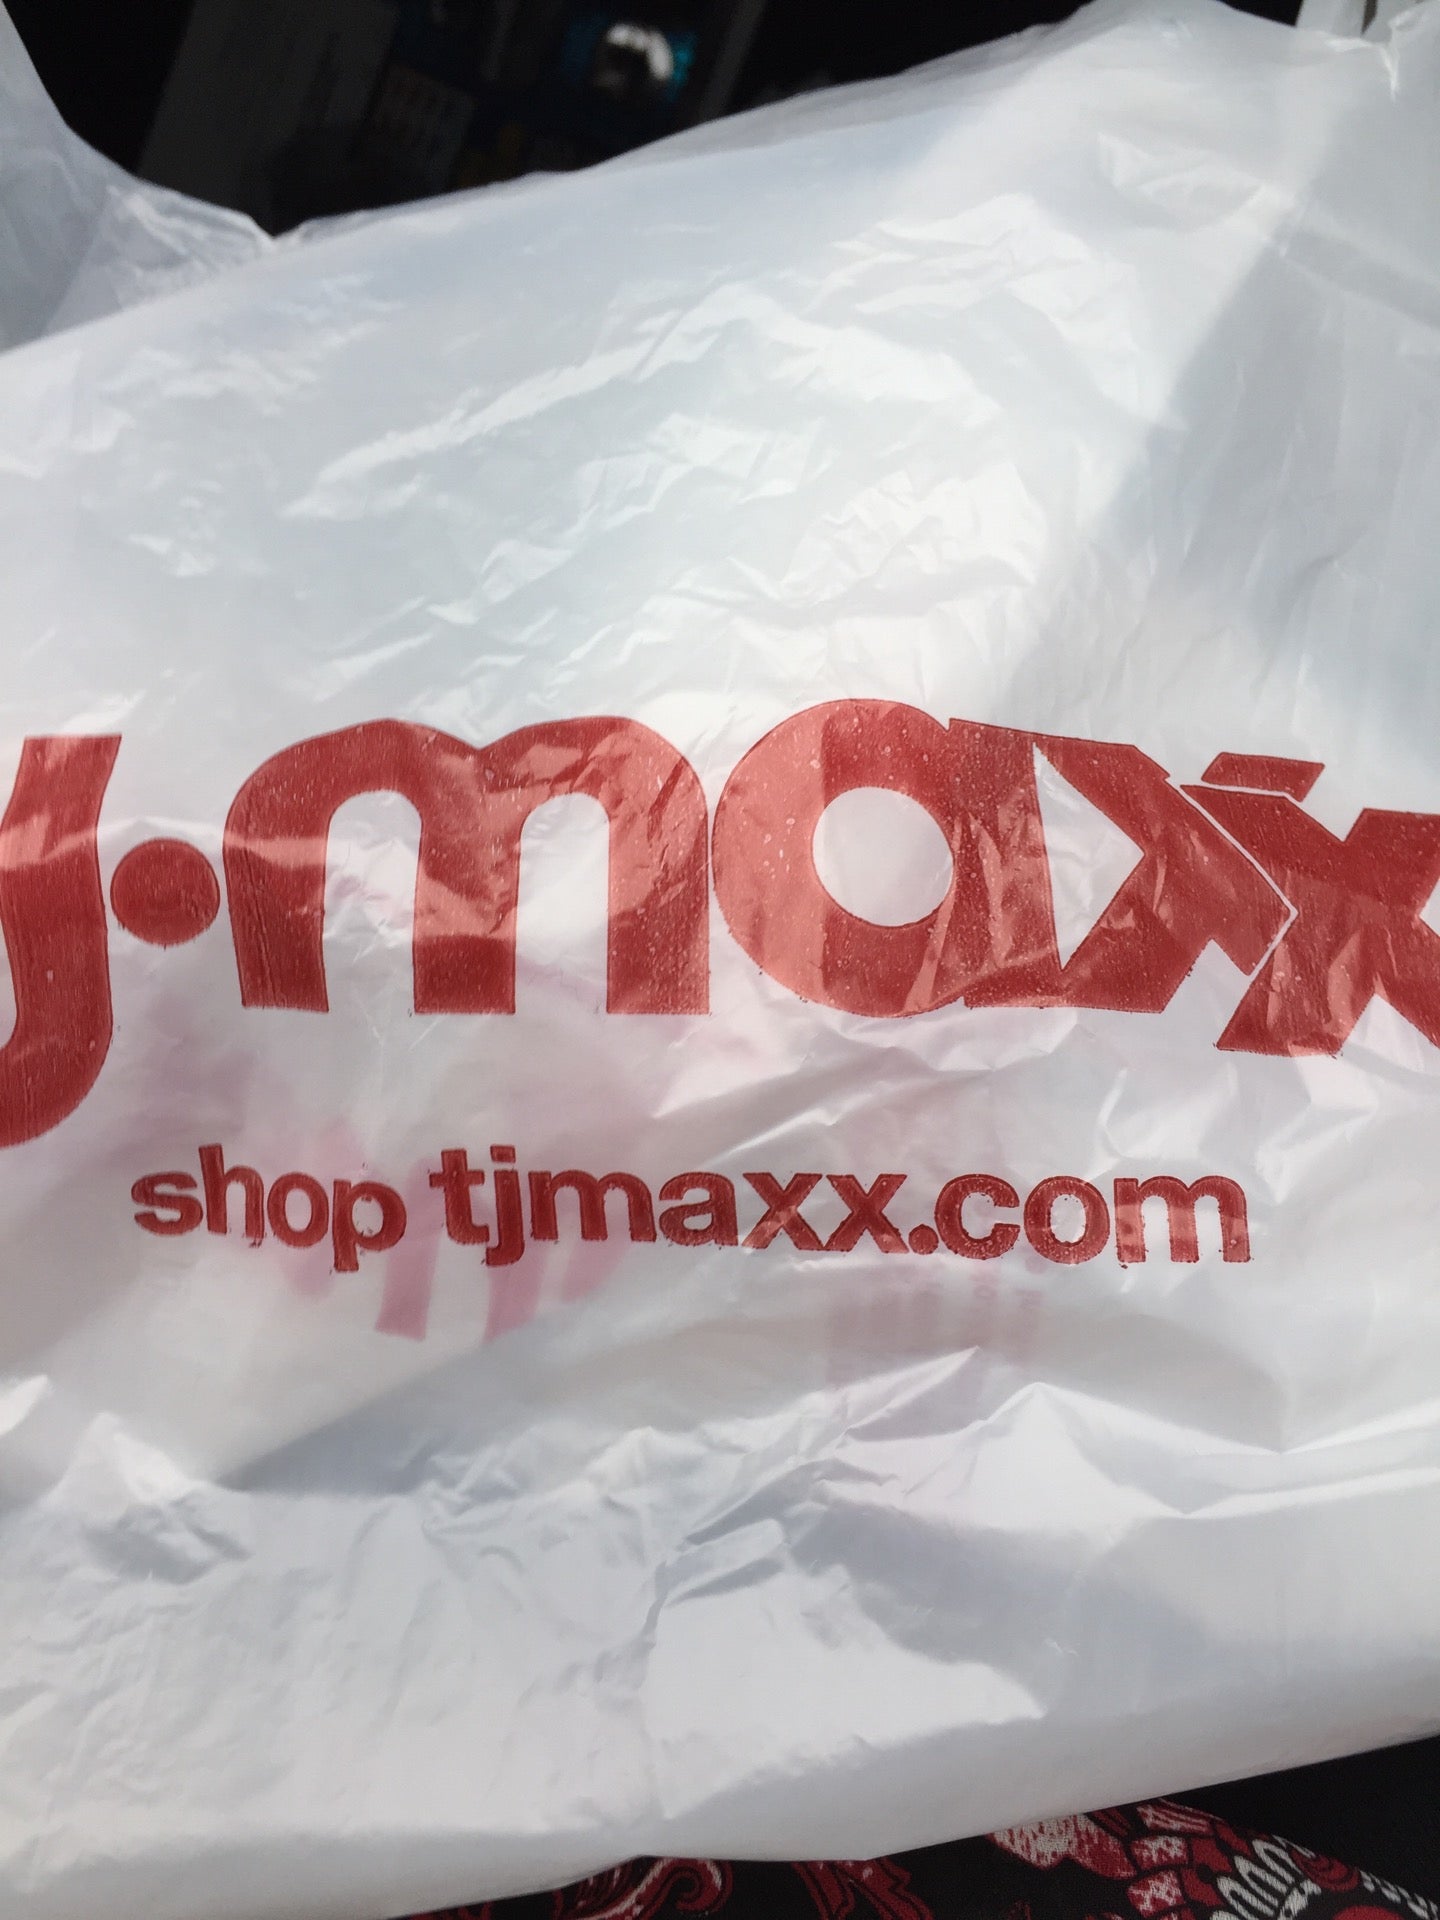 T.J. Maxx Gift Card Balance Check